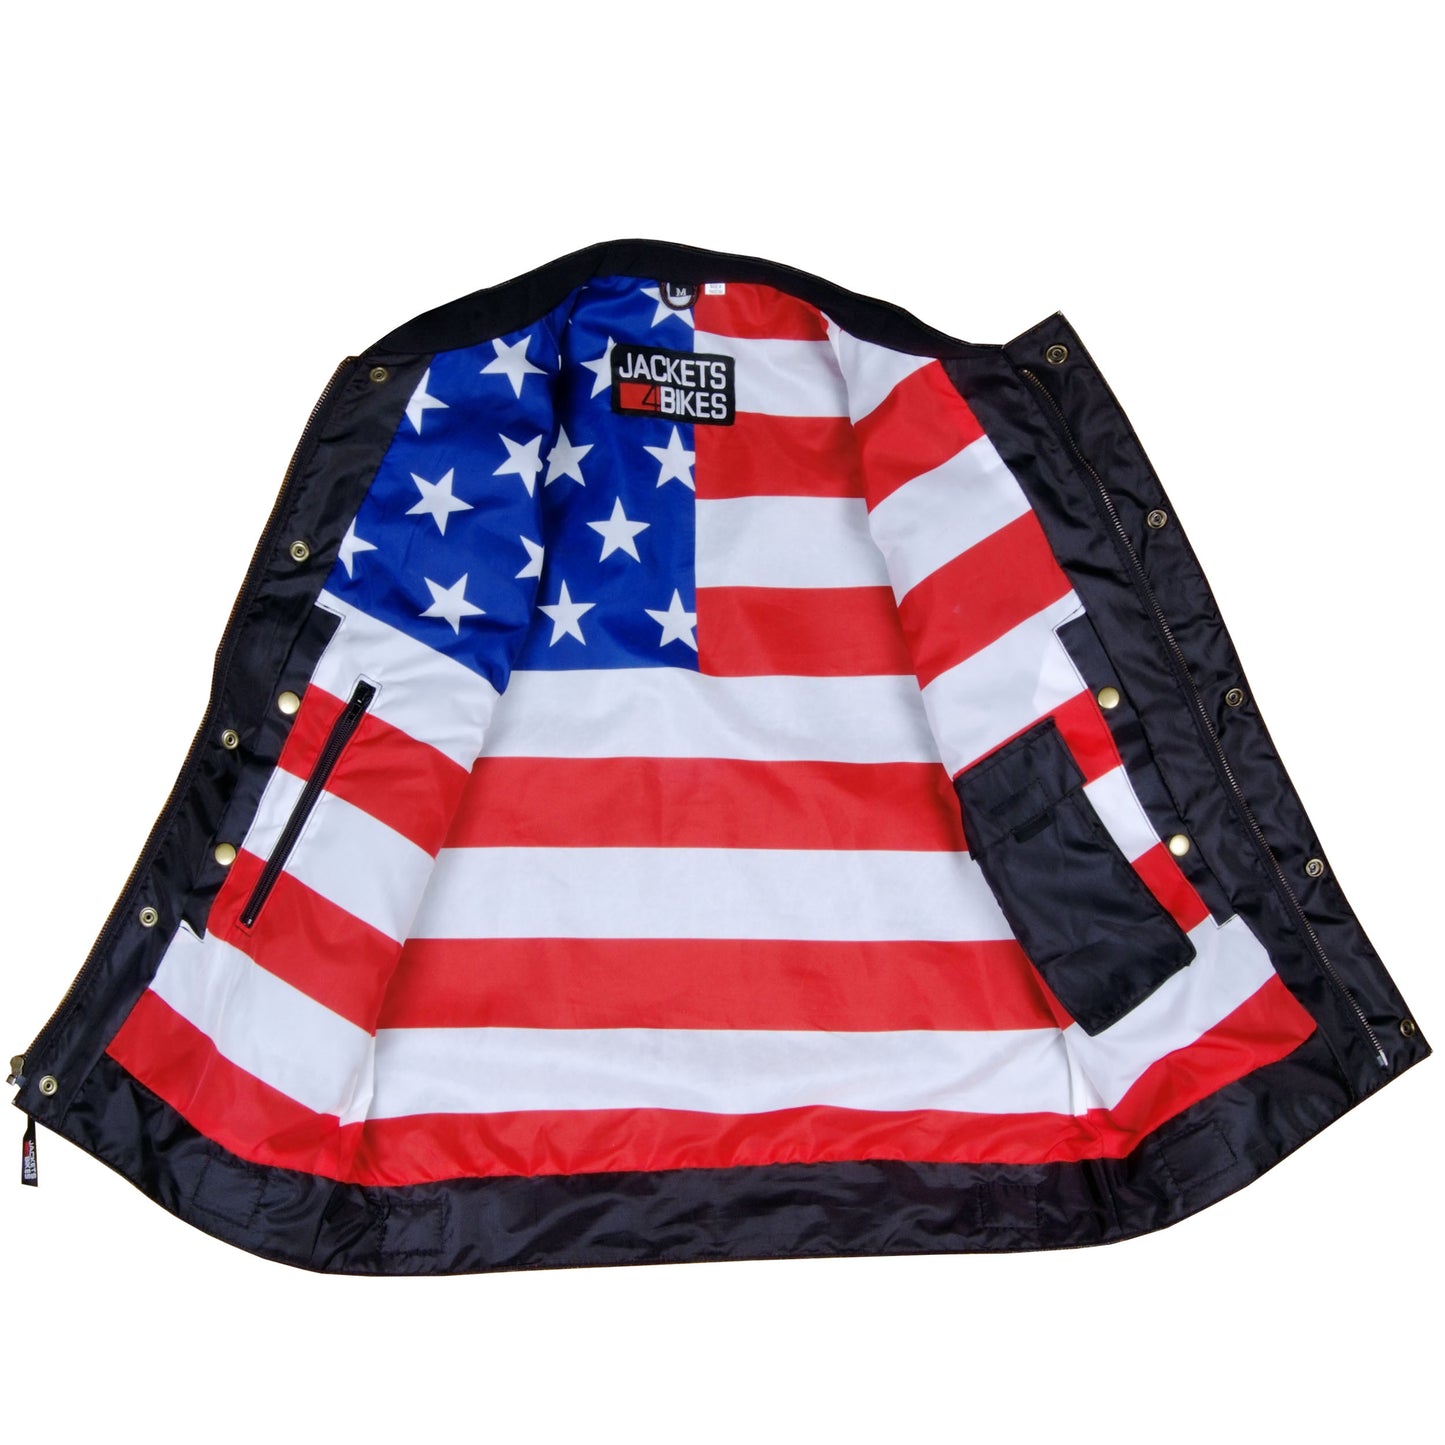 Men's ARMOR Leather SOA Anarchy Motorcycle Biker Club Concealed Carry Vest US Flag